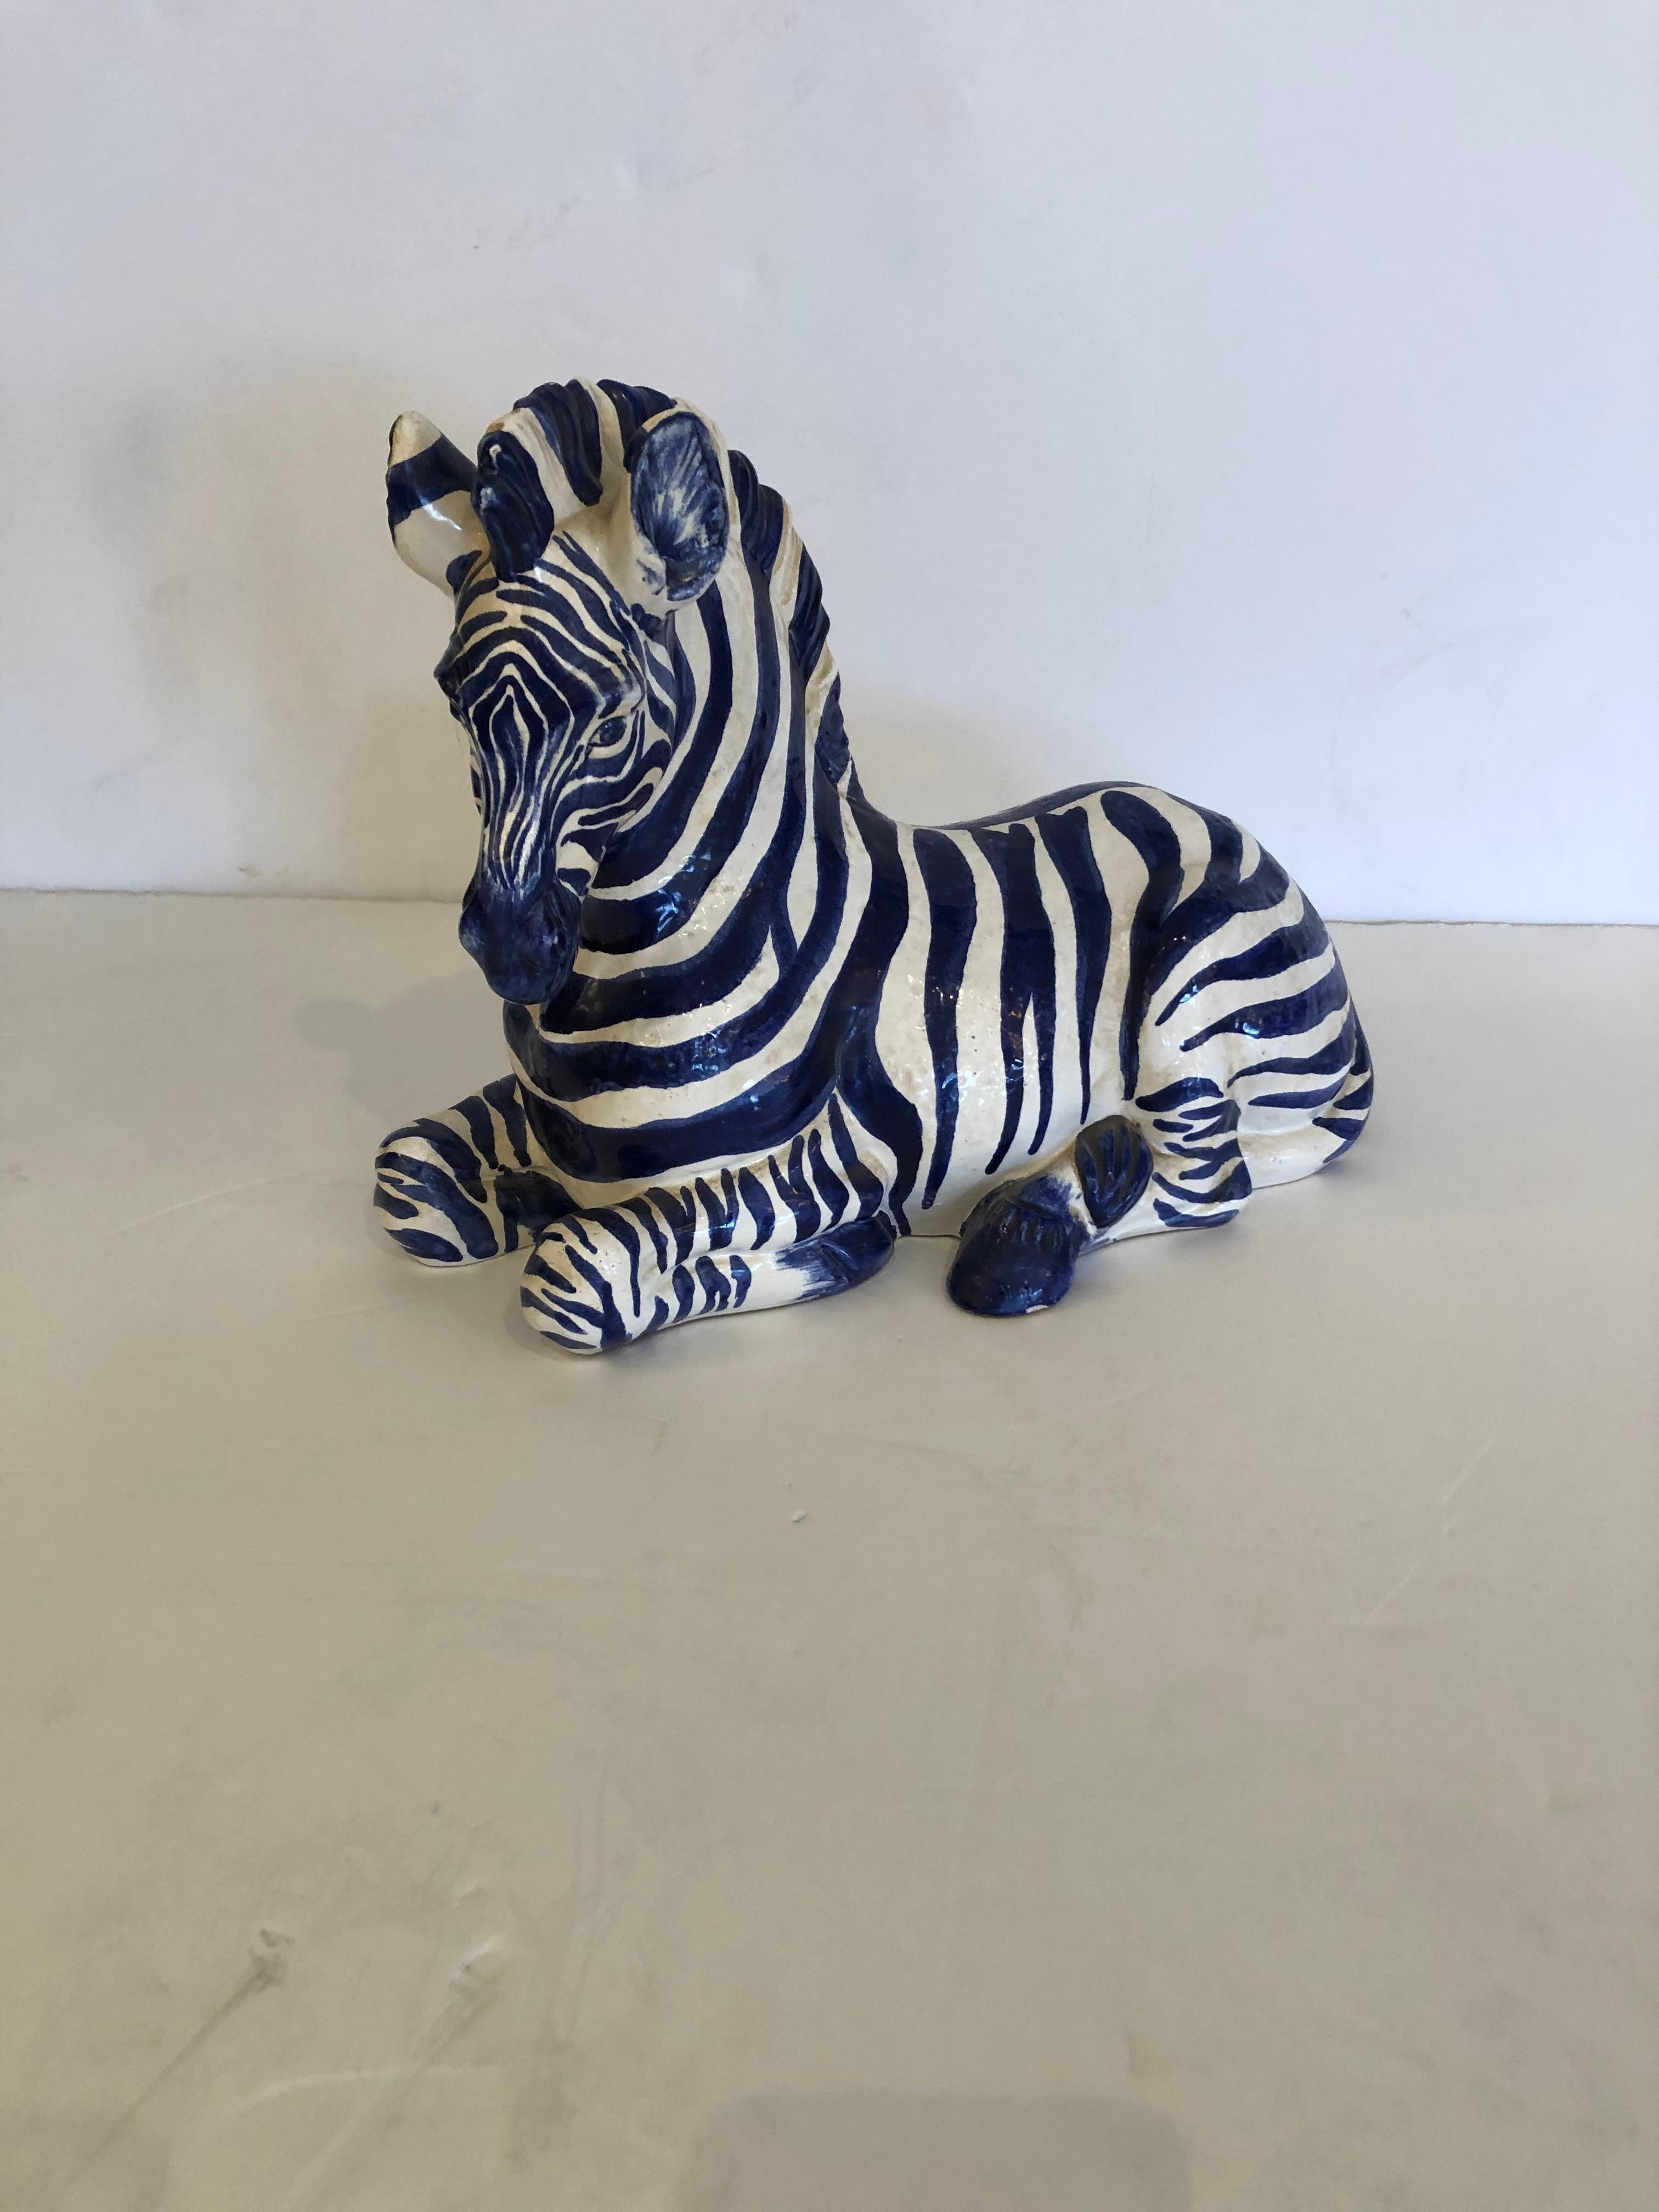 Eye-catching Italian ceramic recumbent zebra sculpture in a rare blue and white color palette.